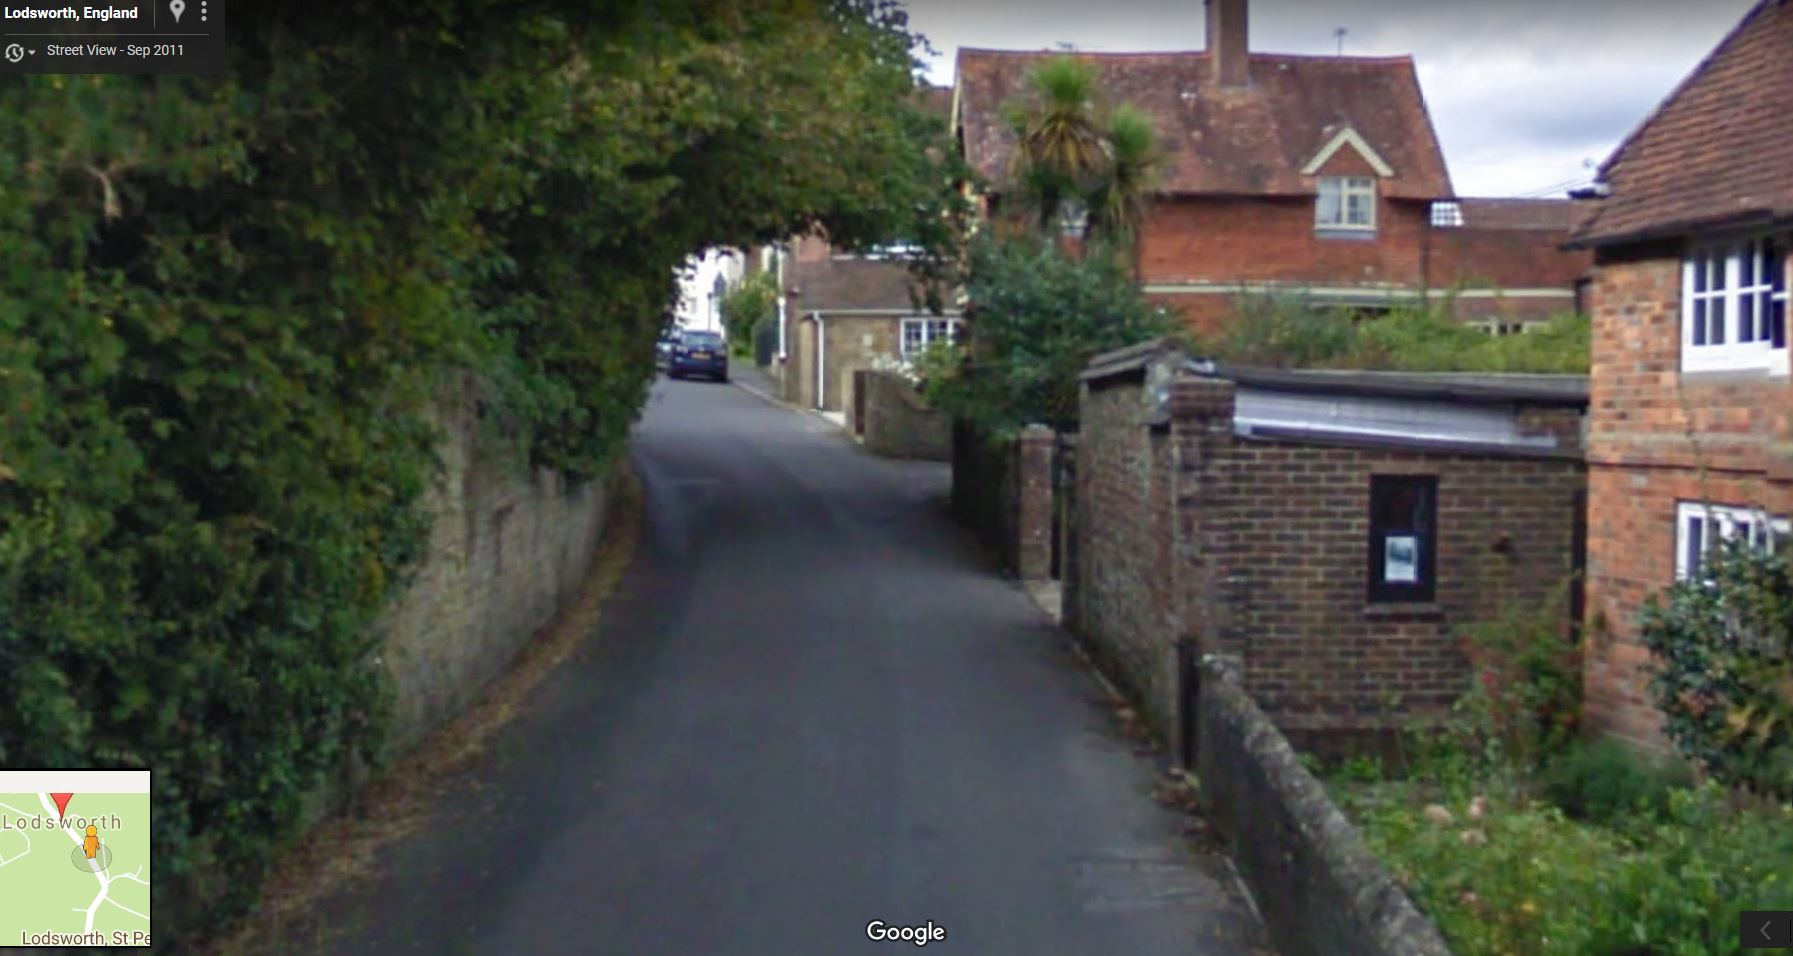 Lodsworth, Sussex - click image to return